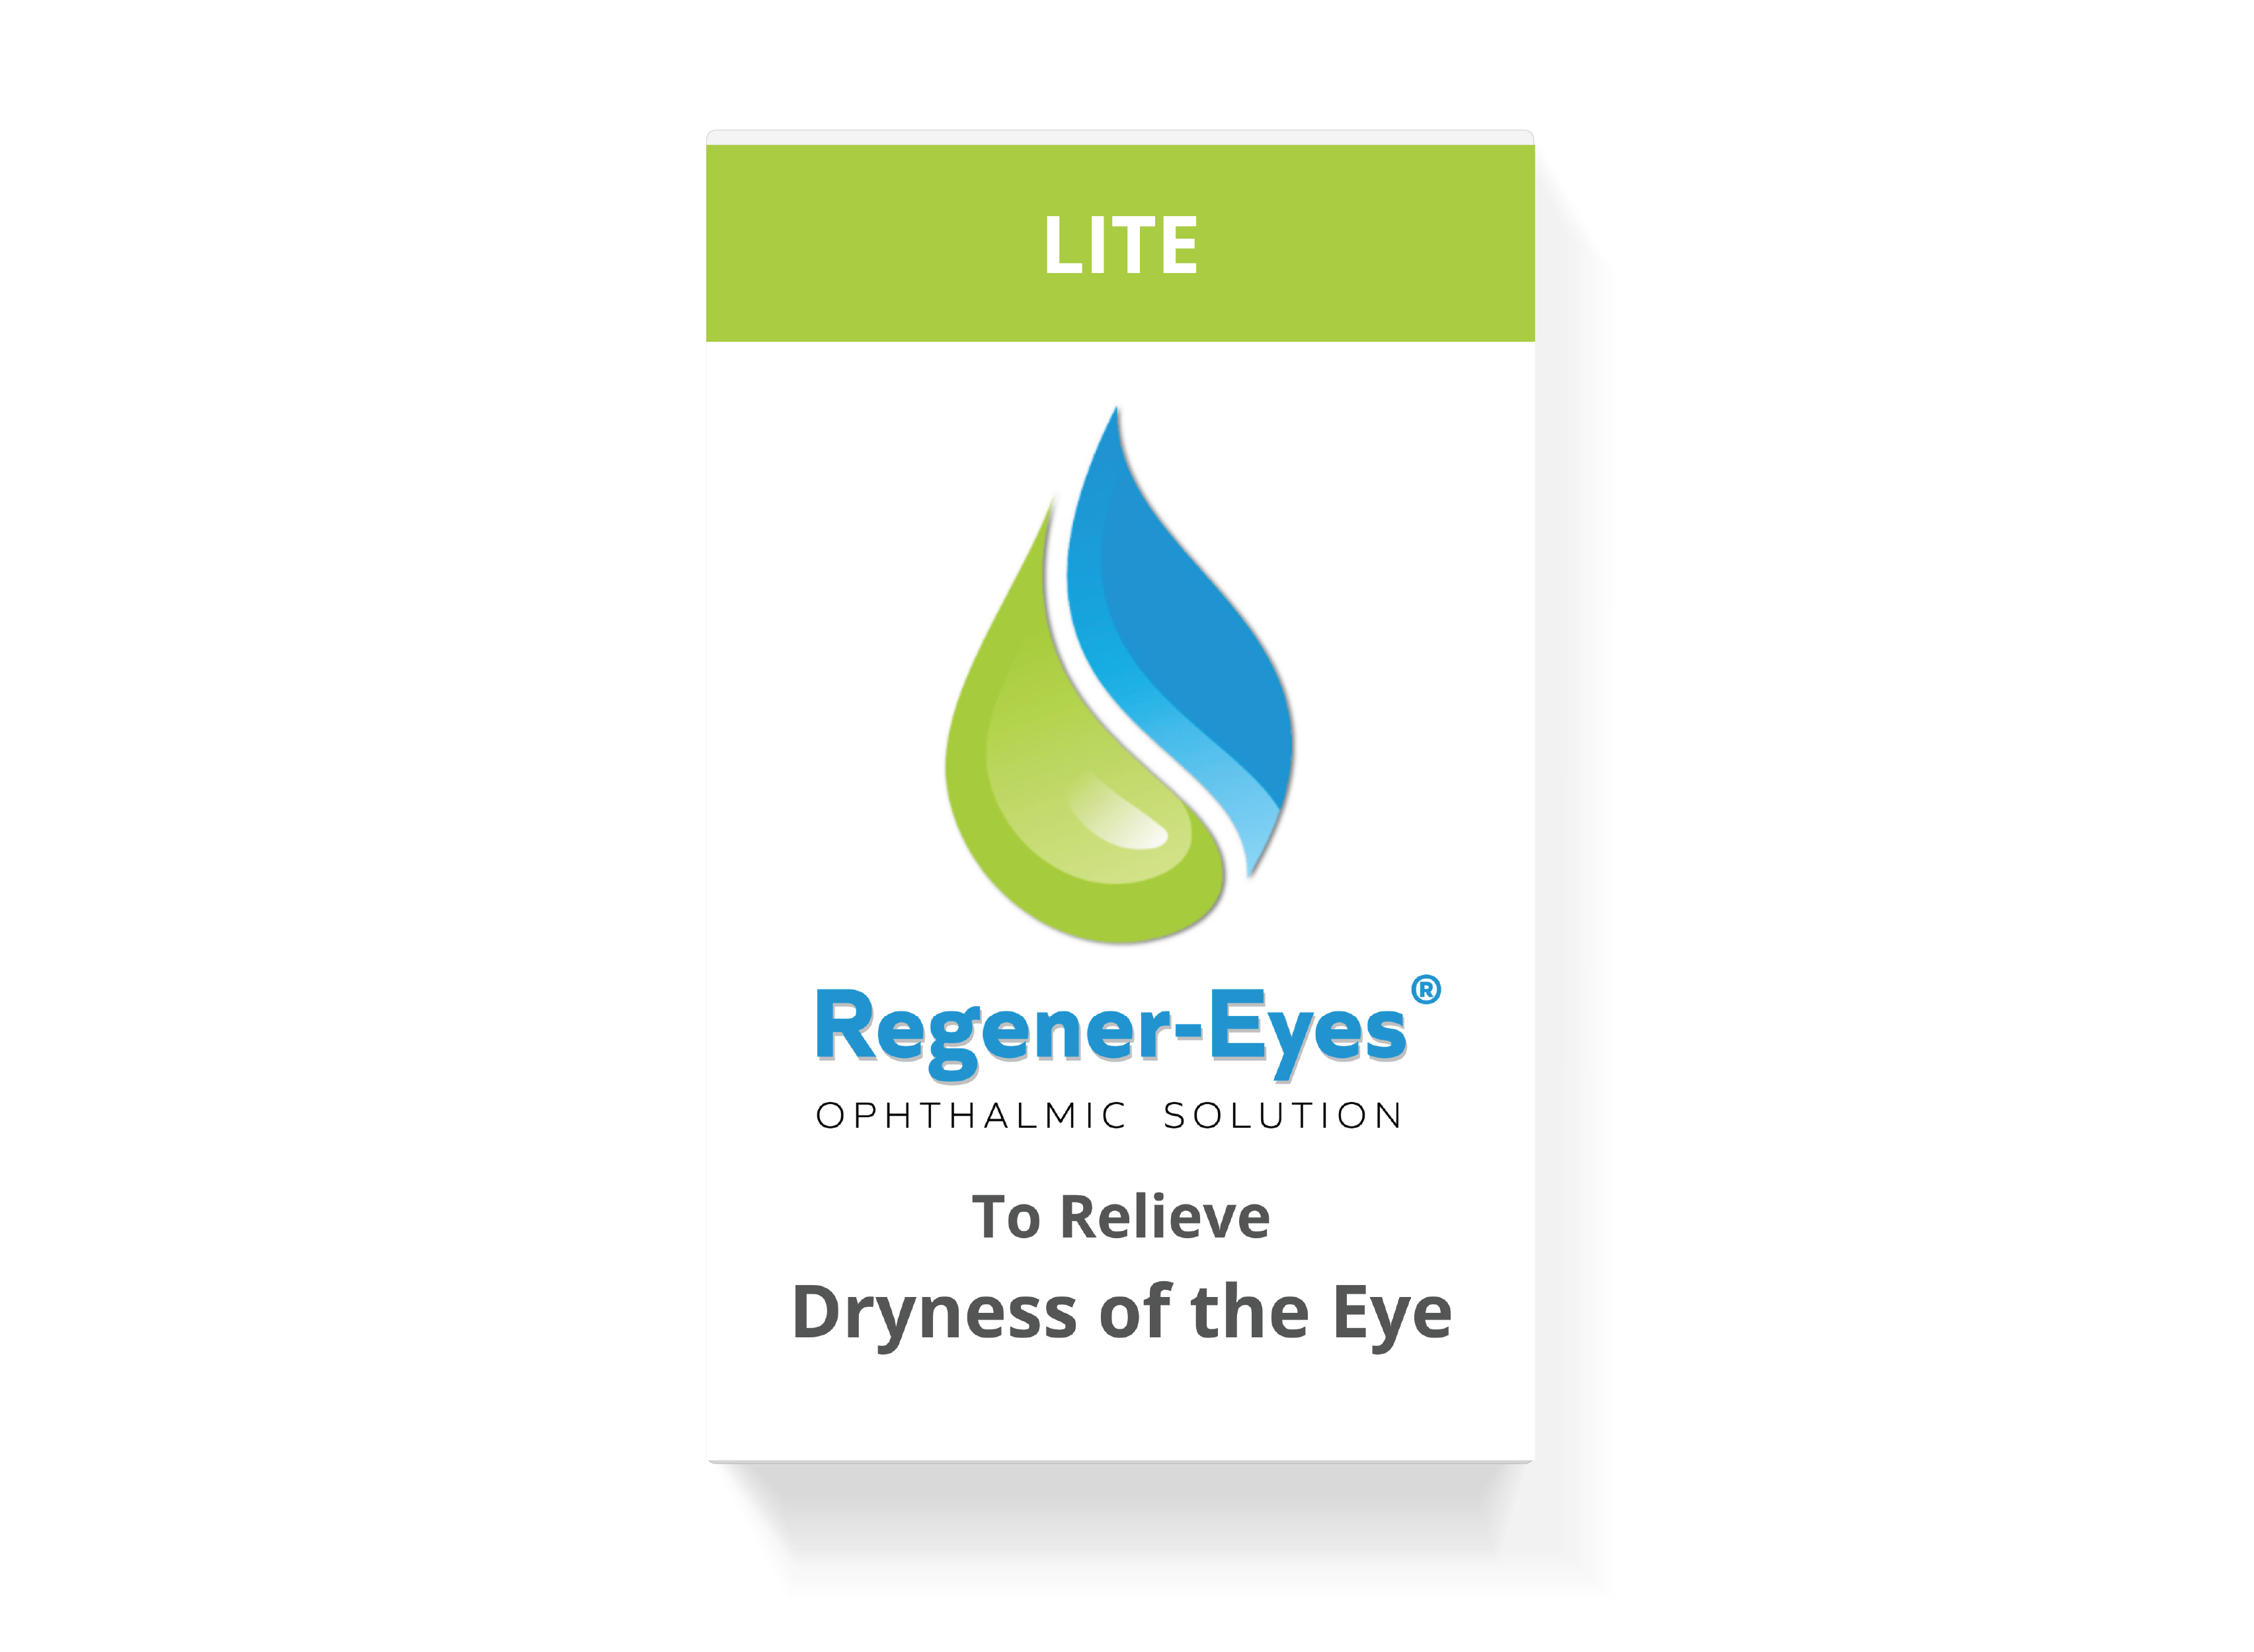 Regener-Eyes® Ophthalmic Solution, LITE